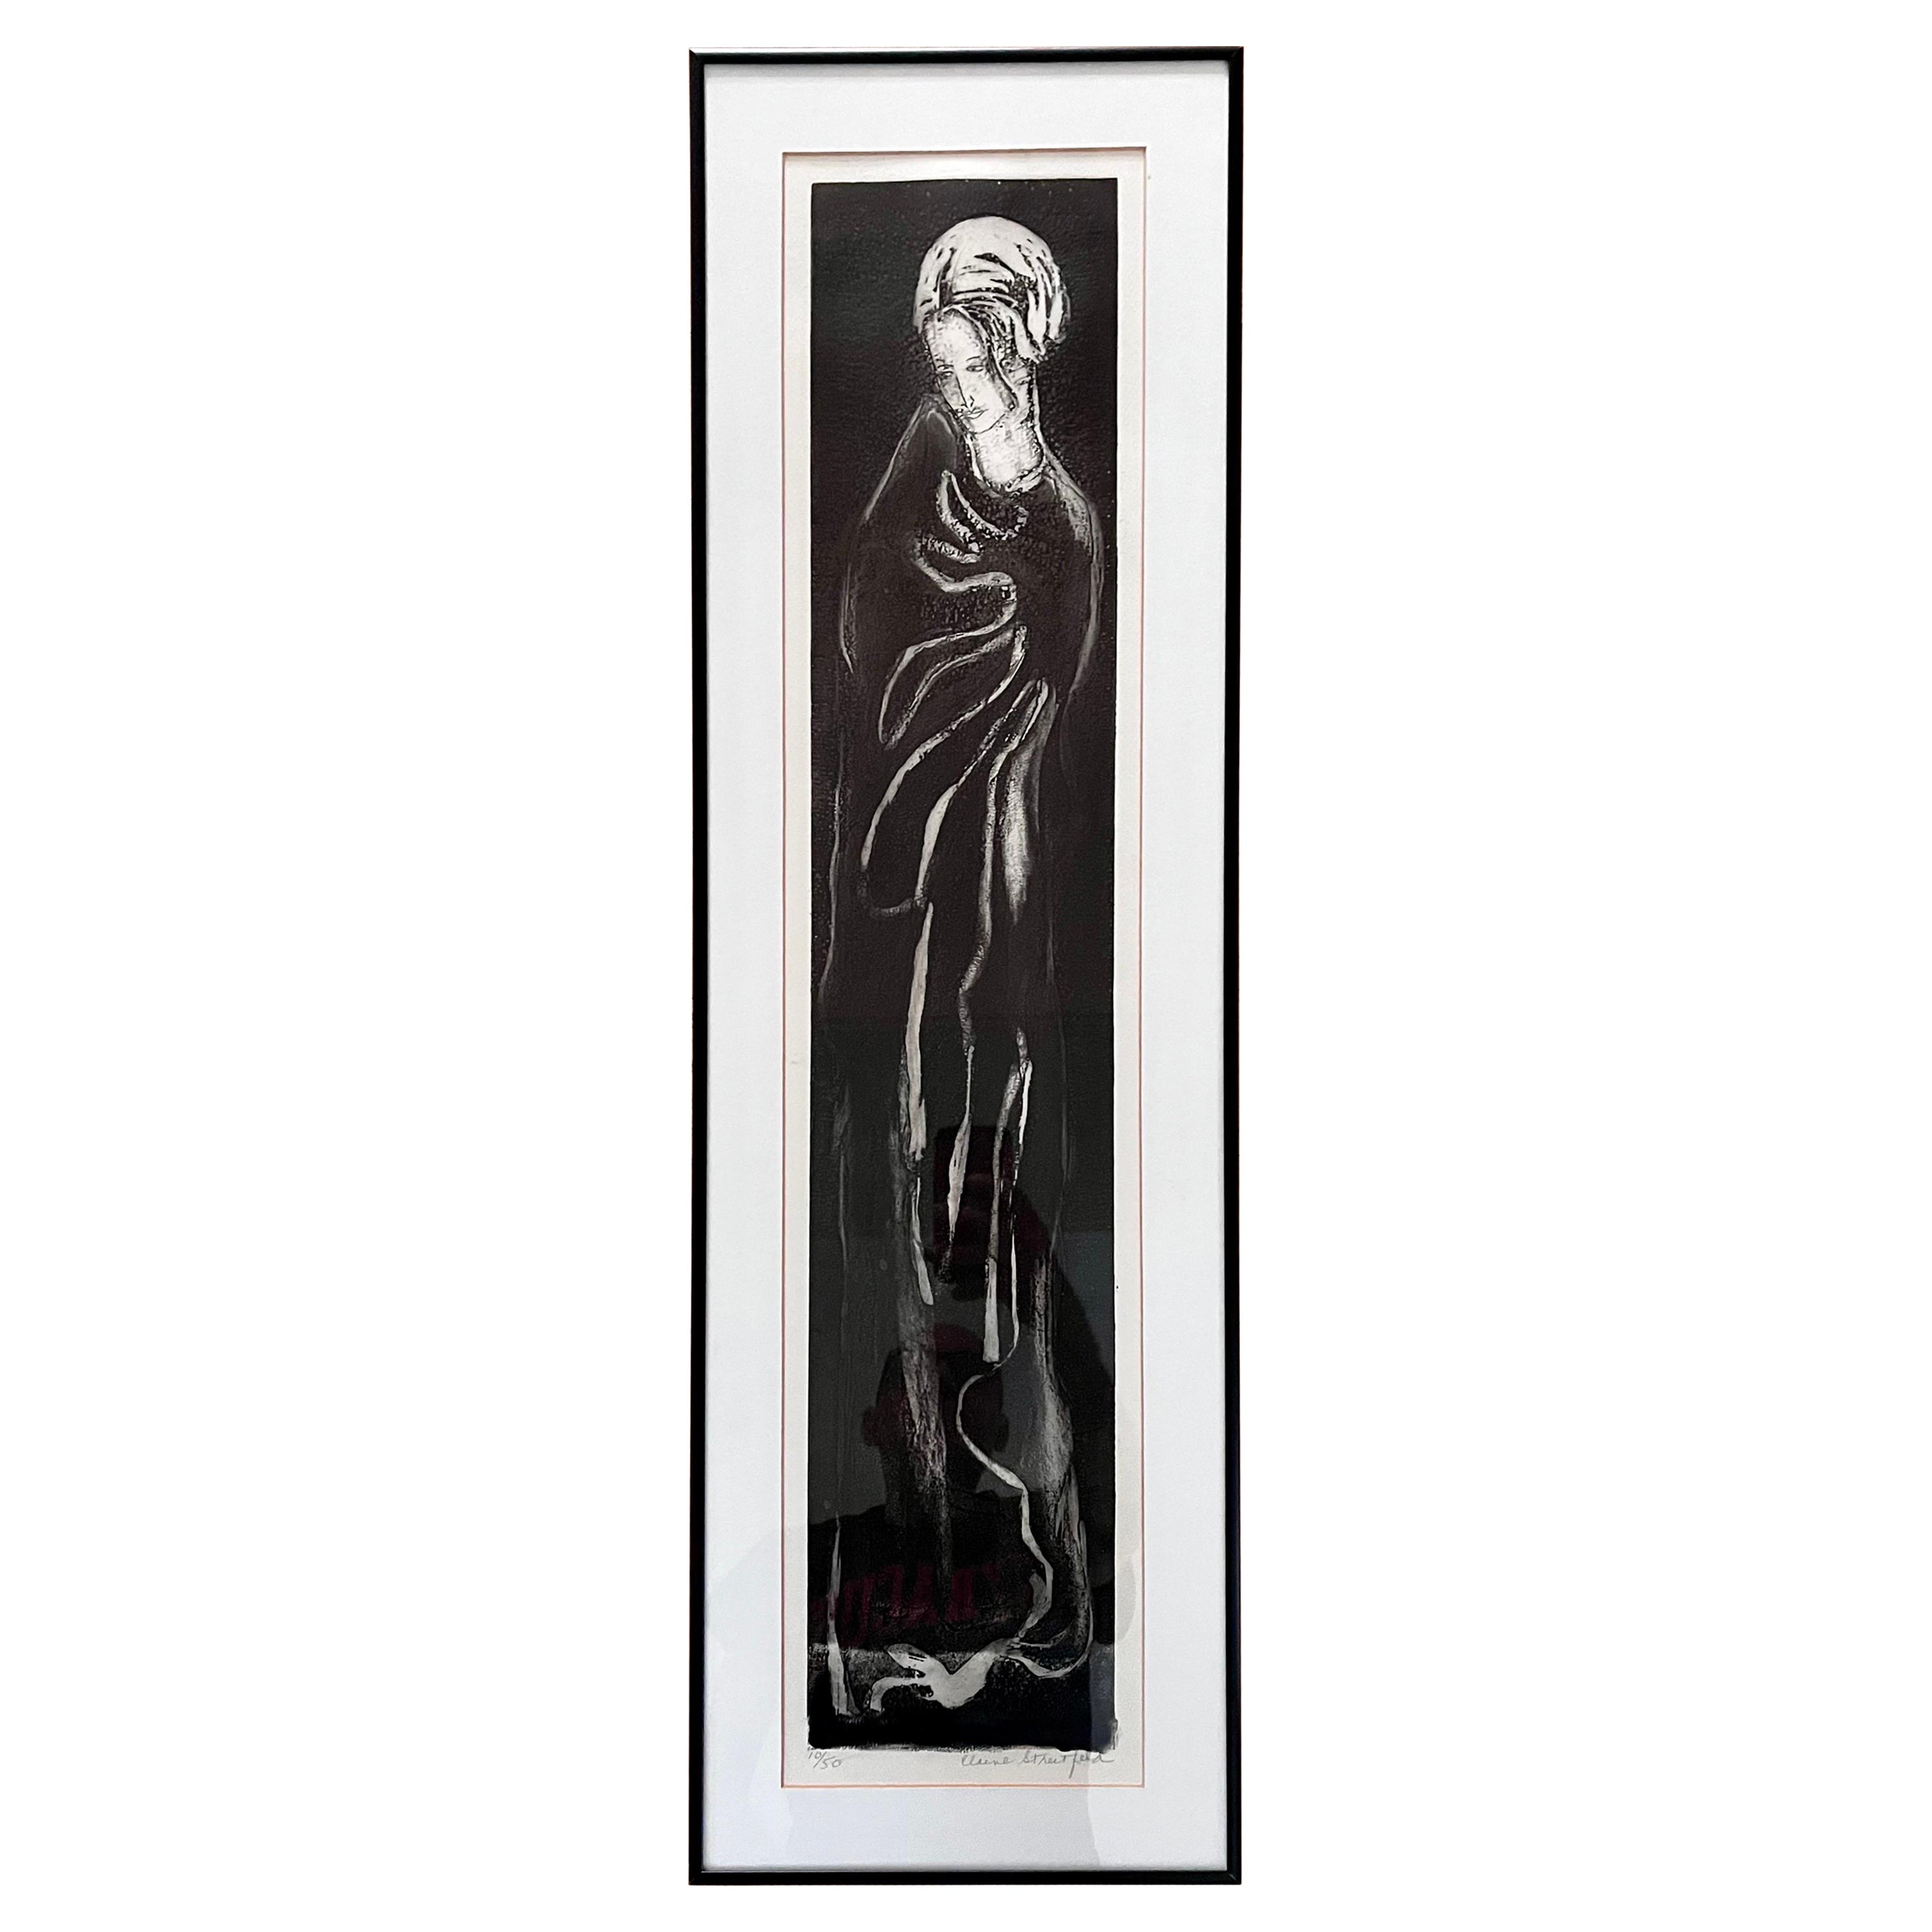 Black & White Print of Female by E. Strectfeld, pencil signed, 10/50